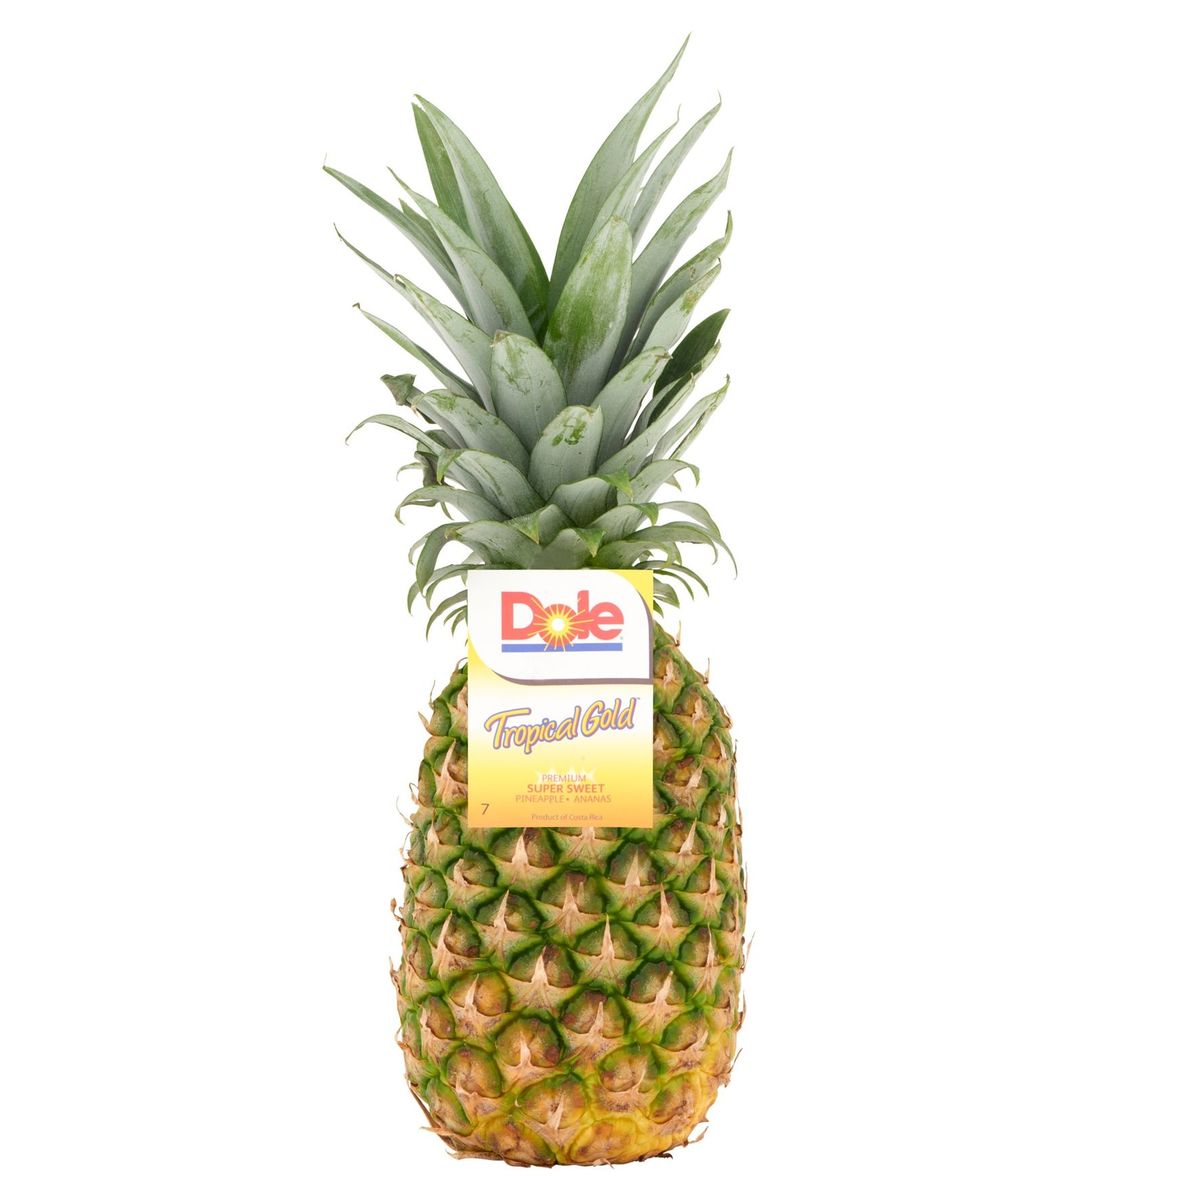 Dole Tropical Gold Premium Ananas